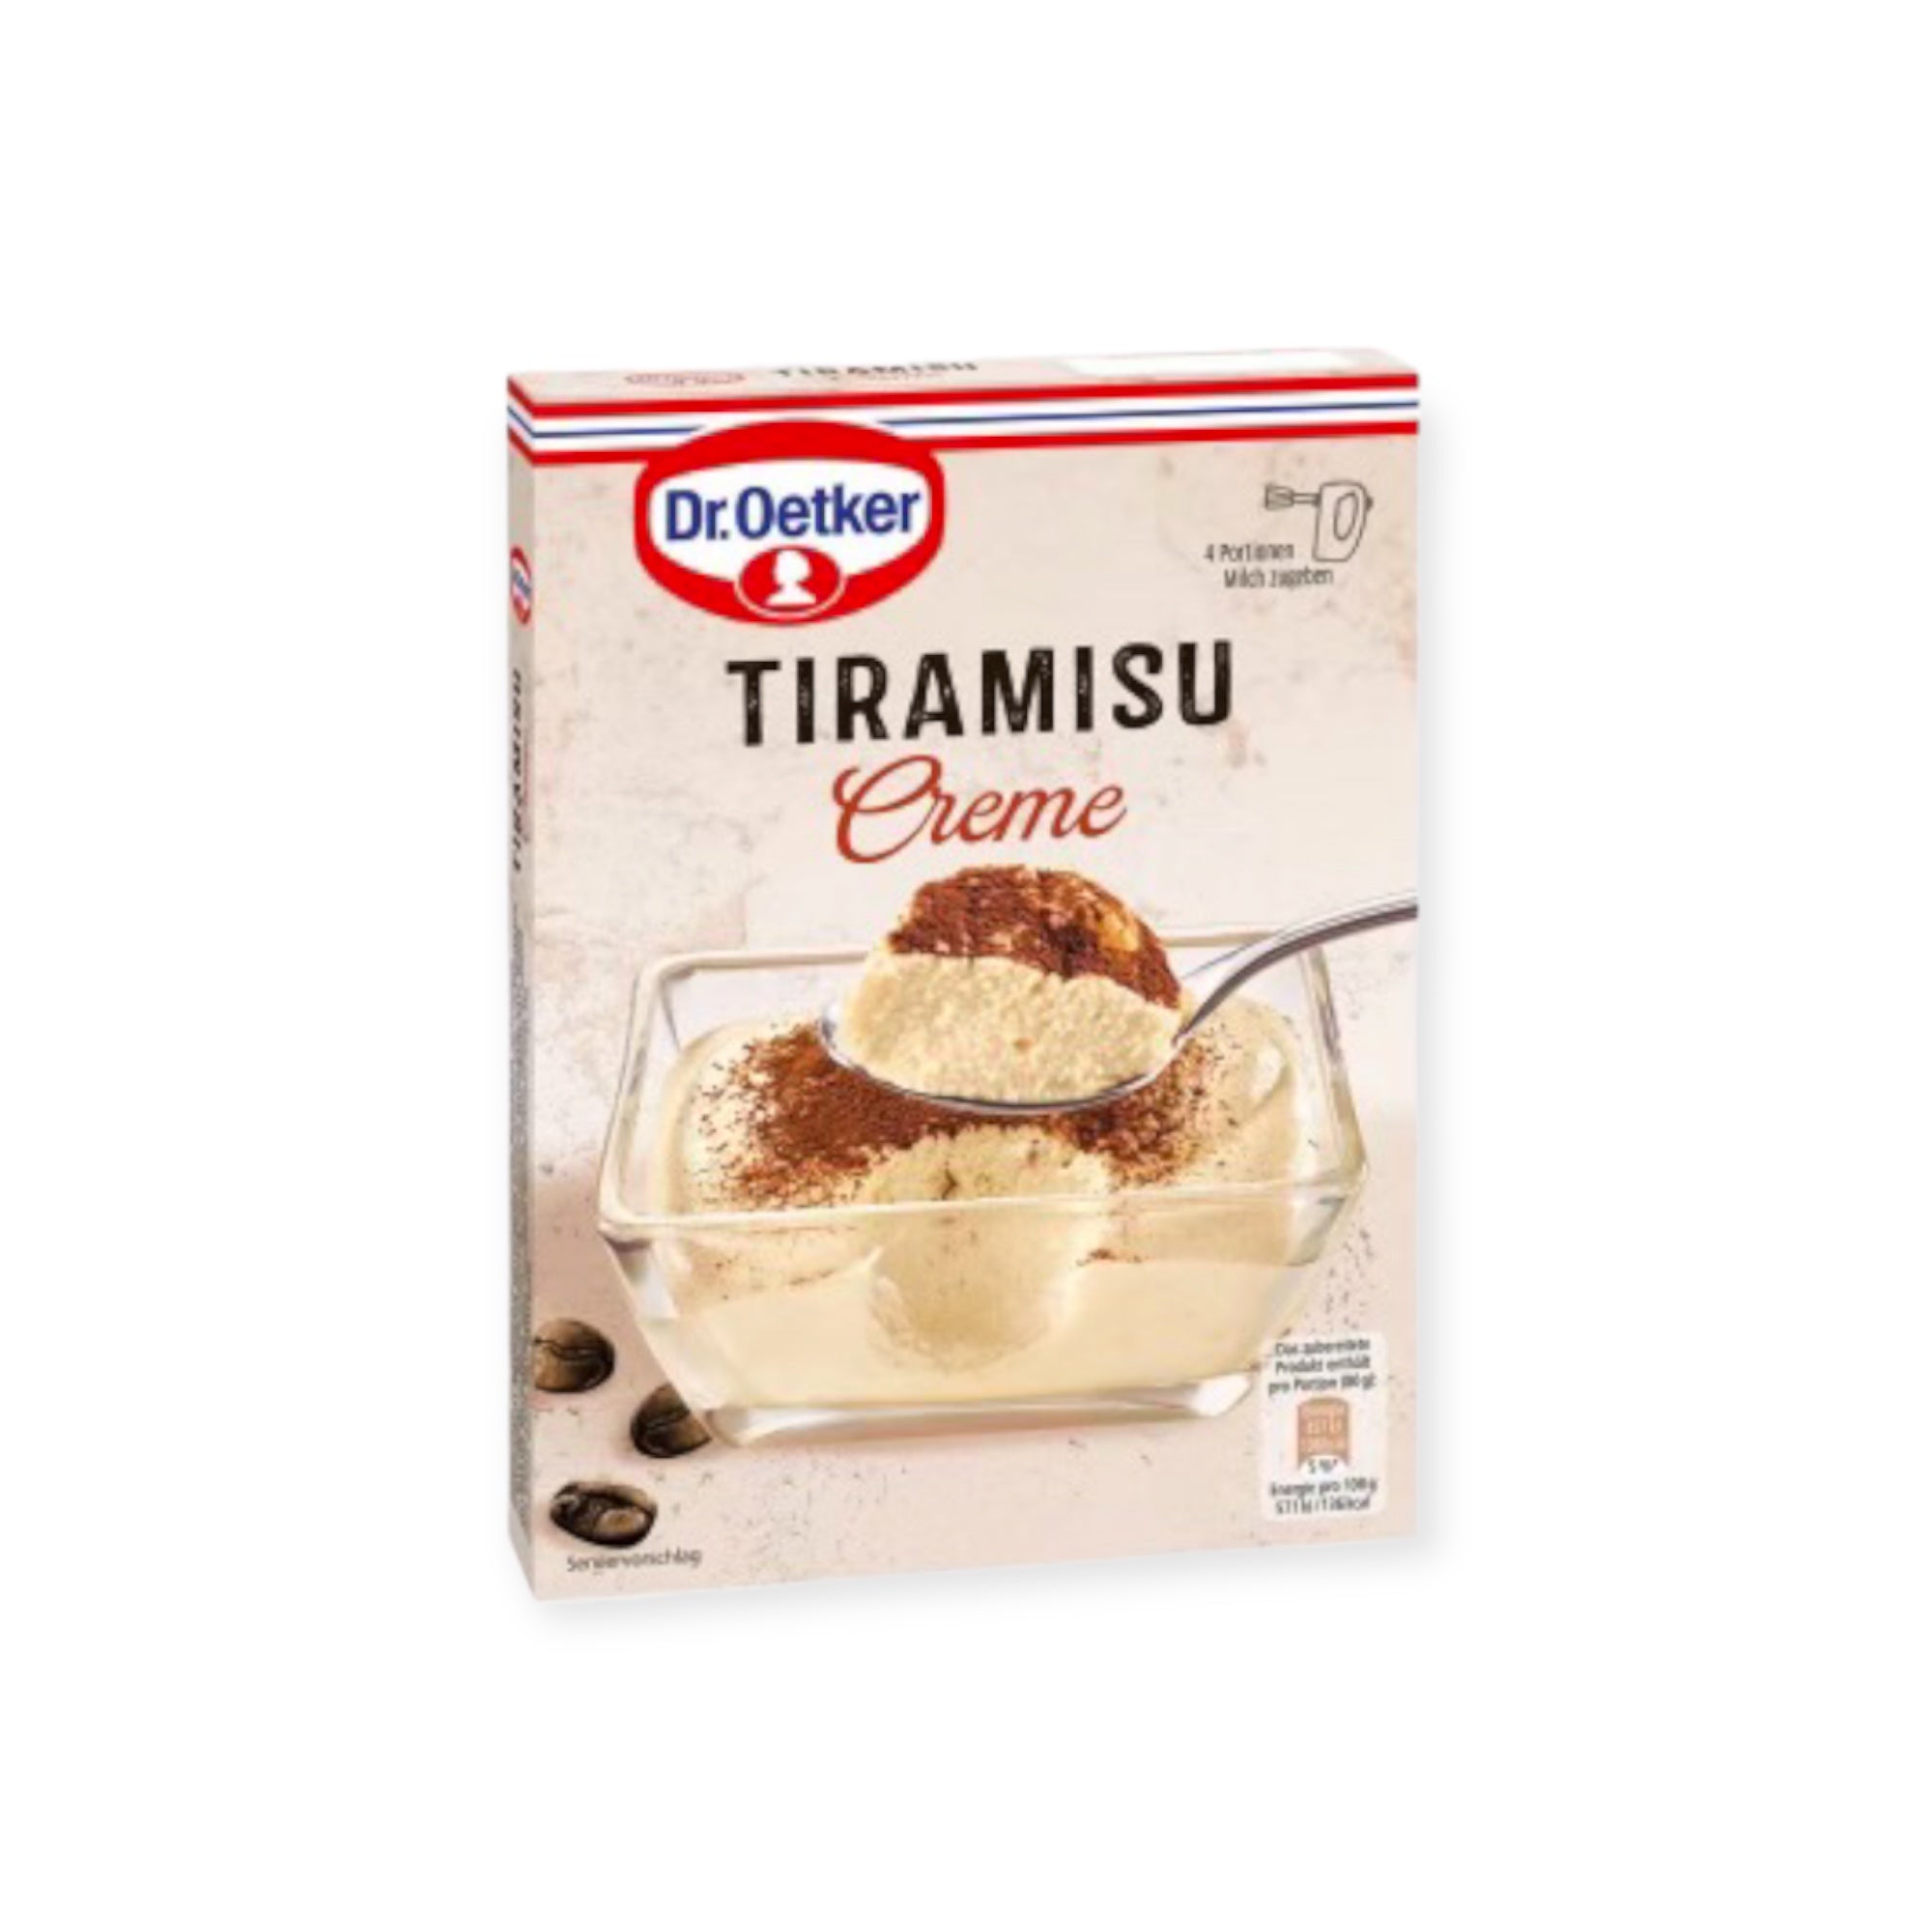 Dr. Oetker Tiramisu Cream